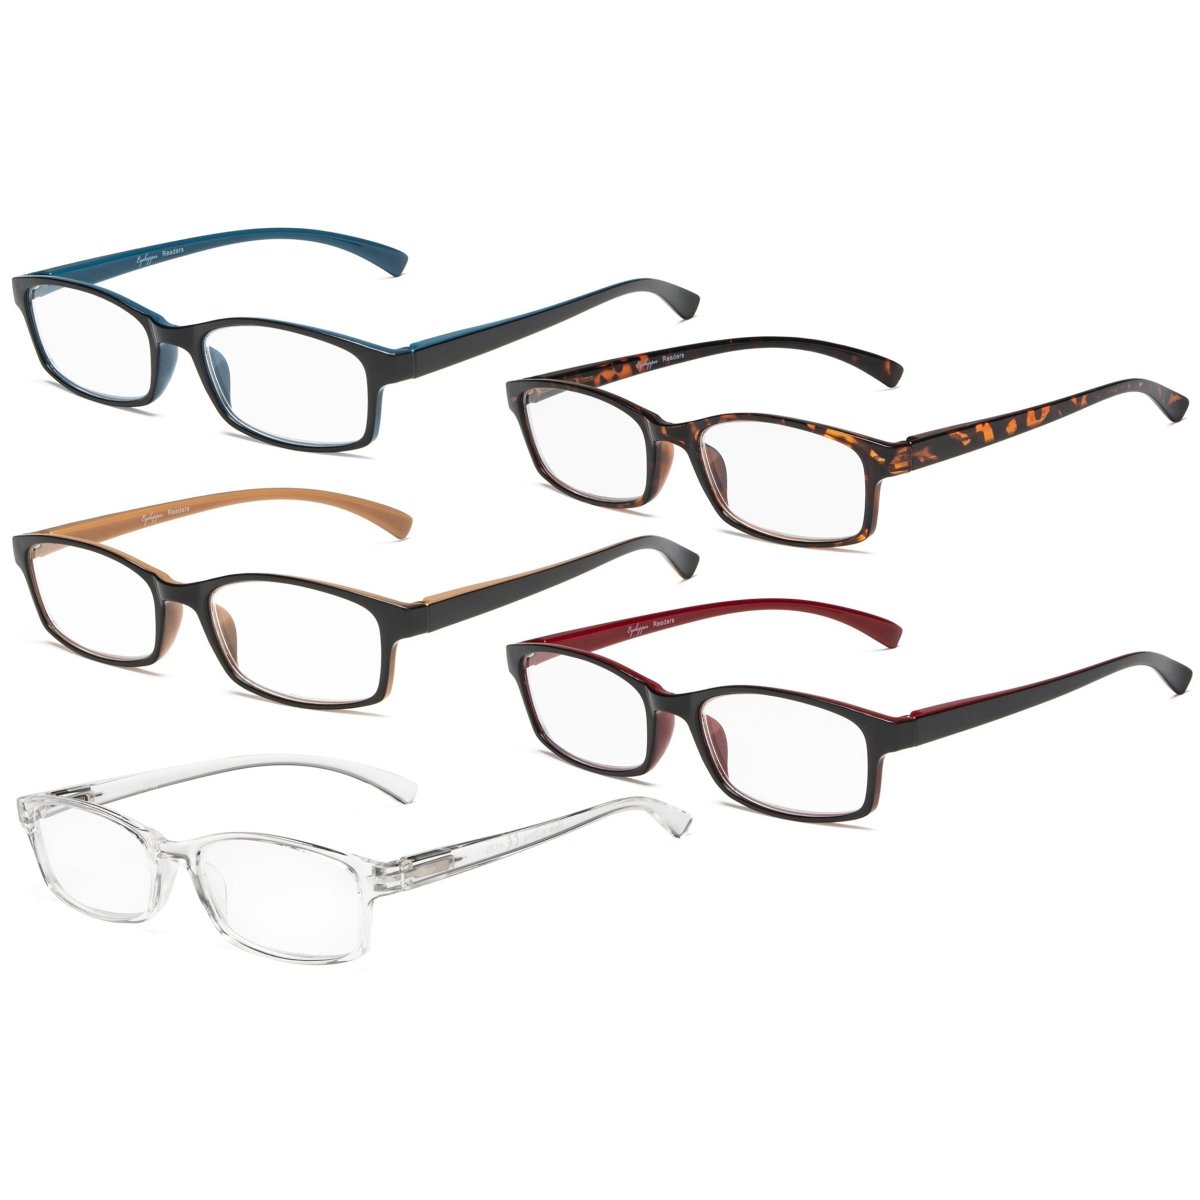 5 Pack Stylish Rectangle Reading Glasses Women Men R177eyekeeper.com